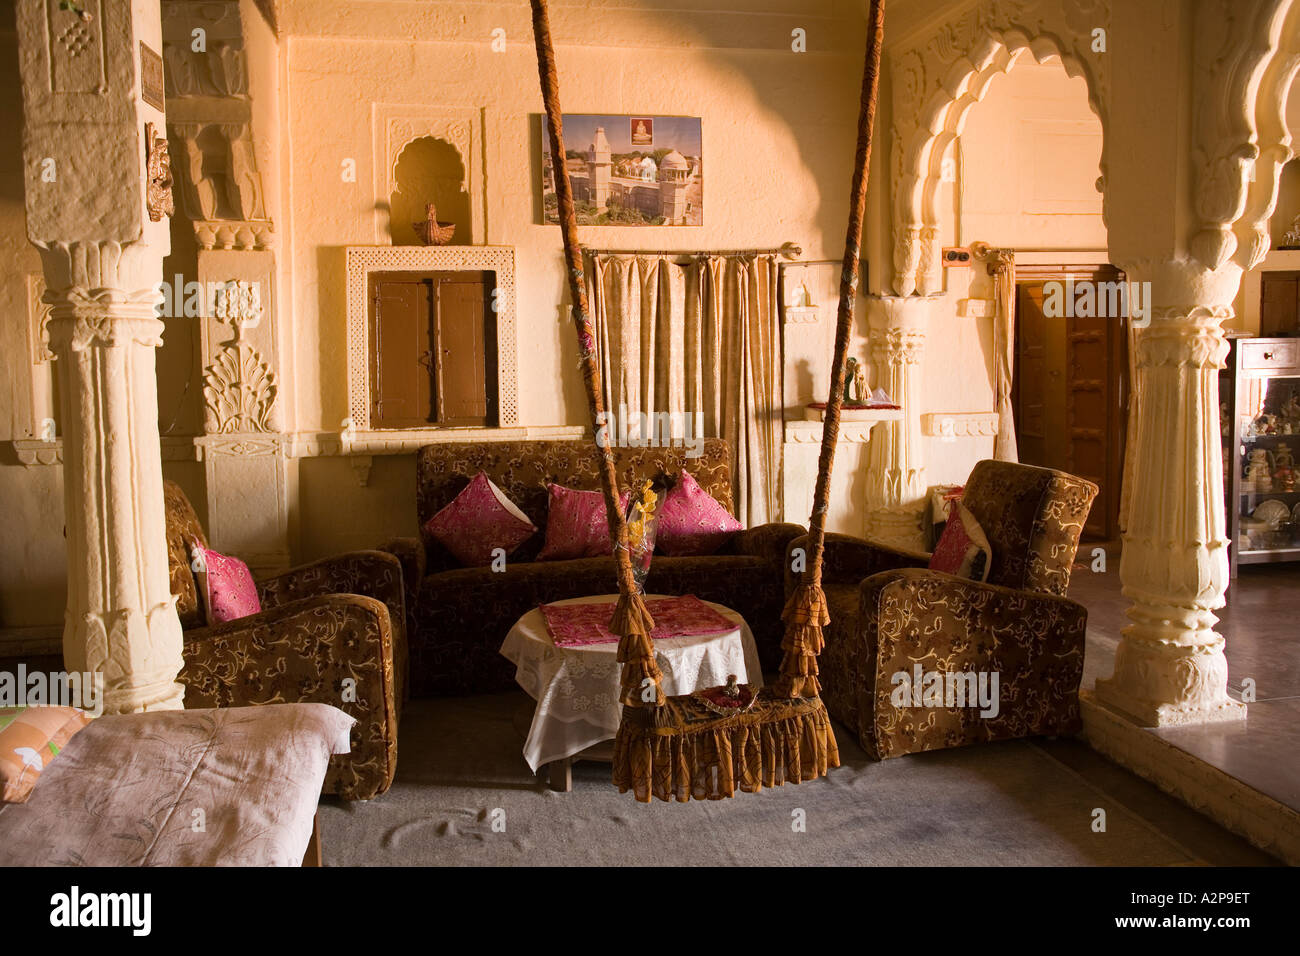 living room furniture jodhpur rajasthan